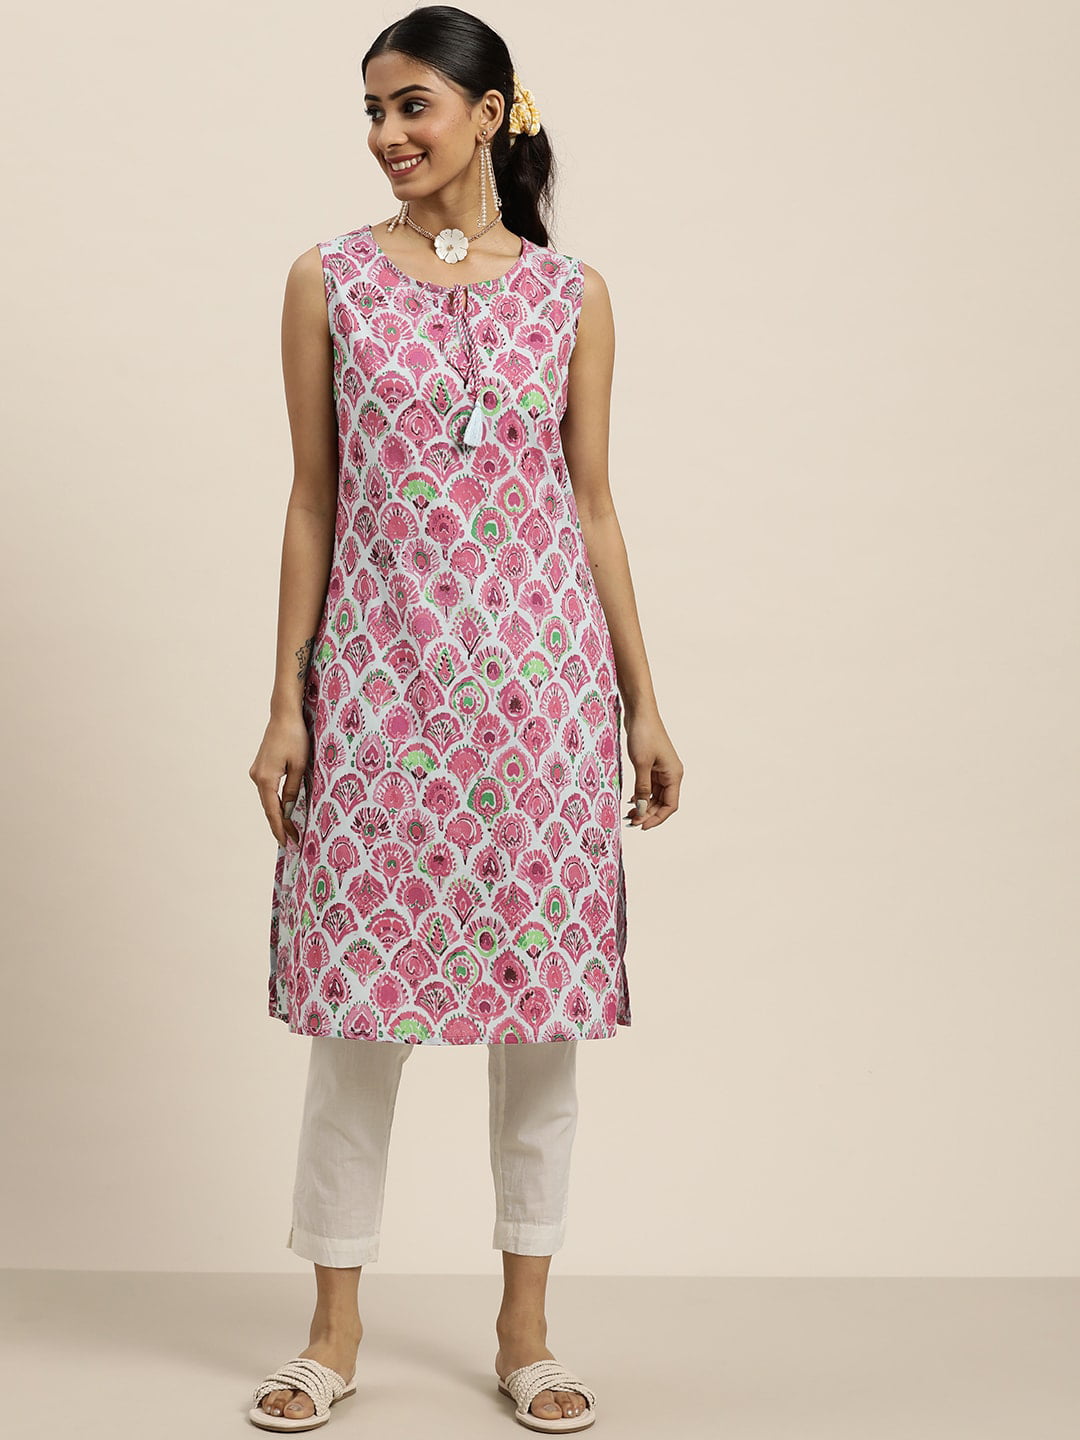 Hospital Dress Dresses - Buy Hospital Dress Dresses online in India